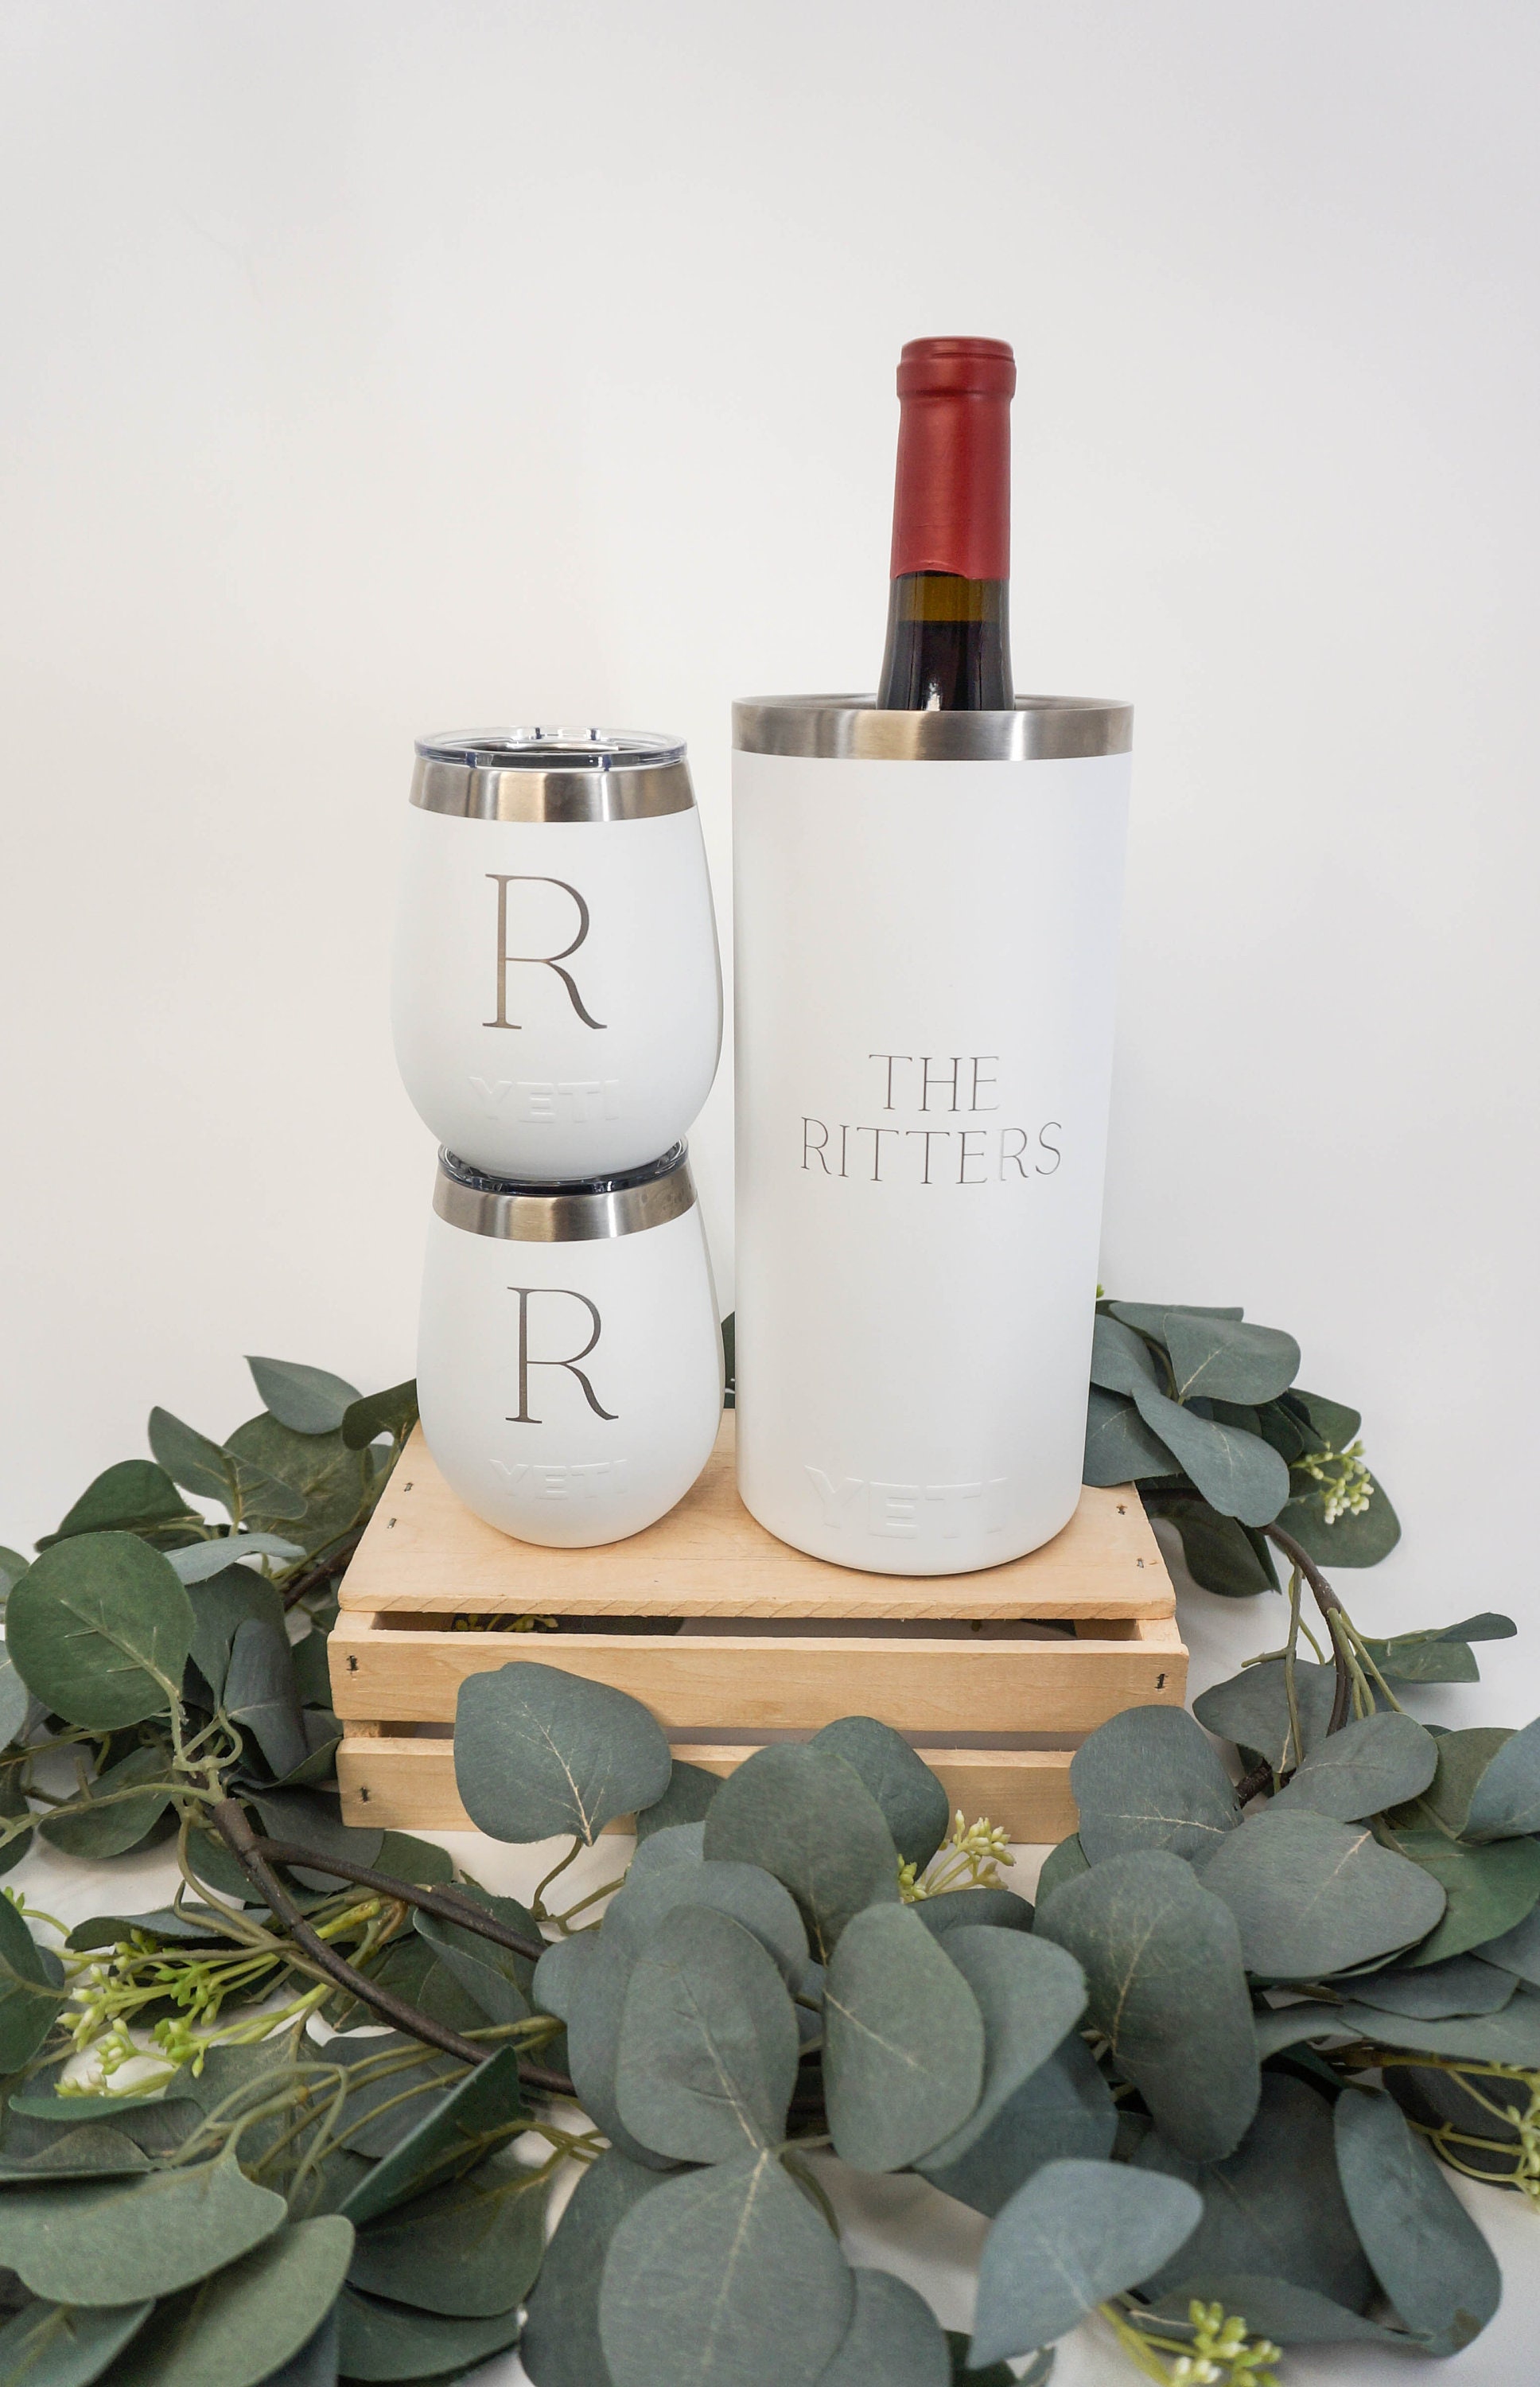 Select Superb yeti wine bottle cooler For Varied Applications